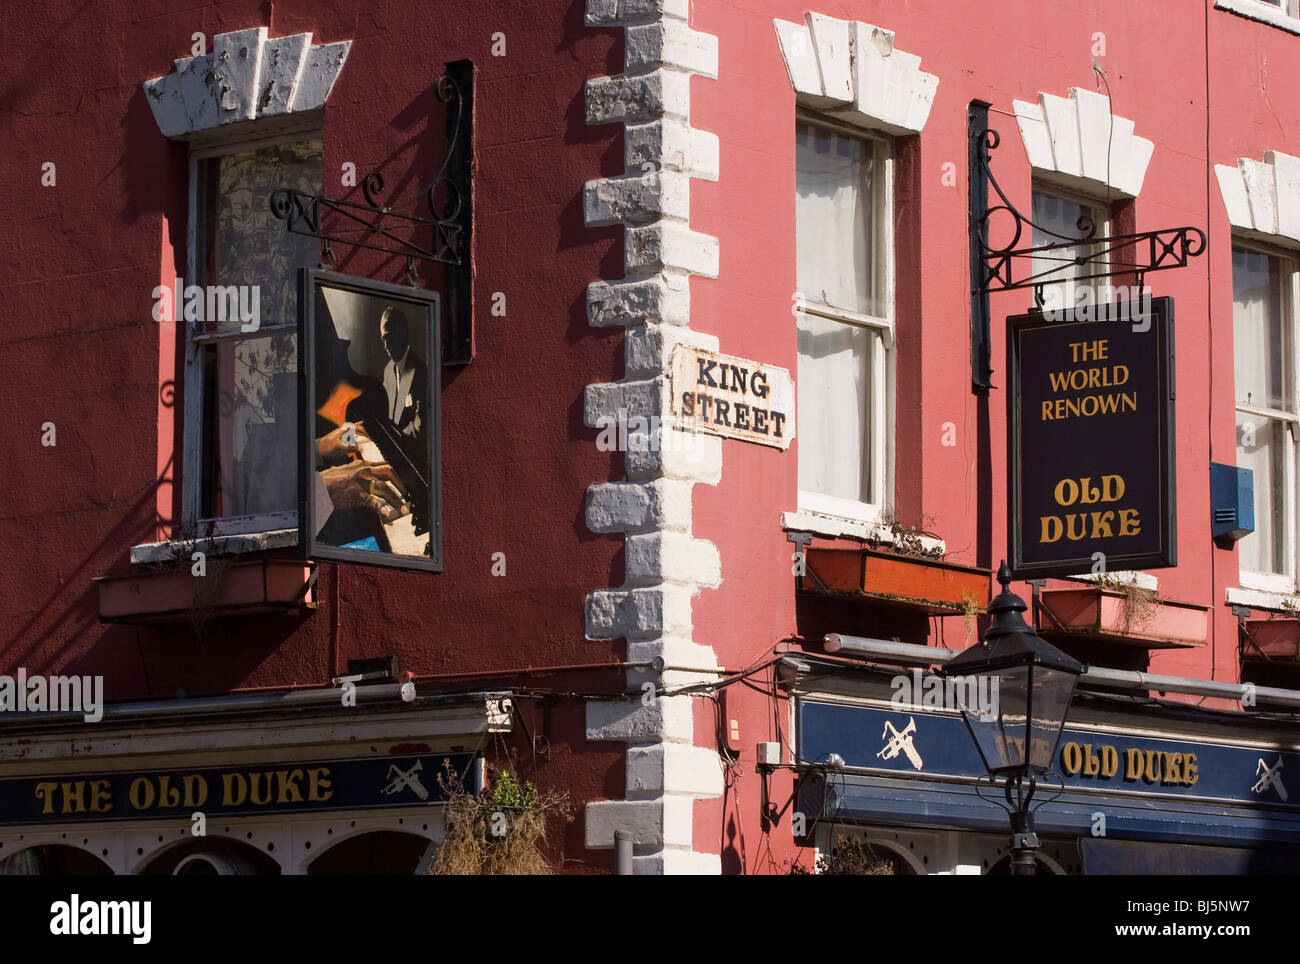 The world renown 'Old Duke' pub in King Street, Bristol, England. Stock Photo